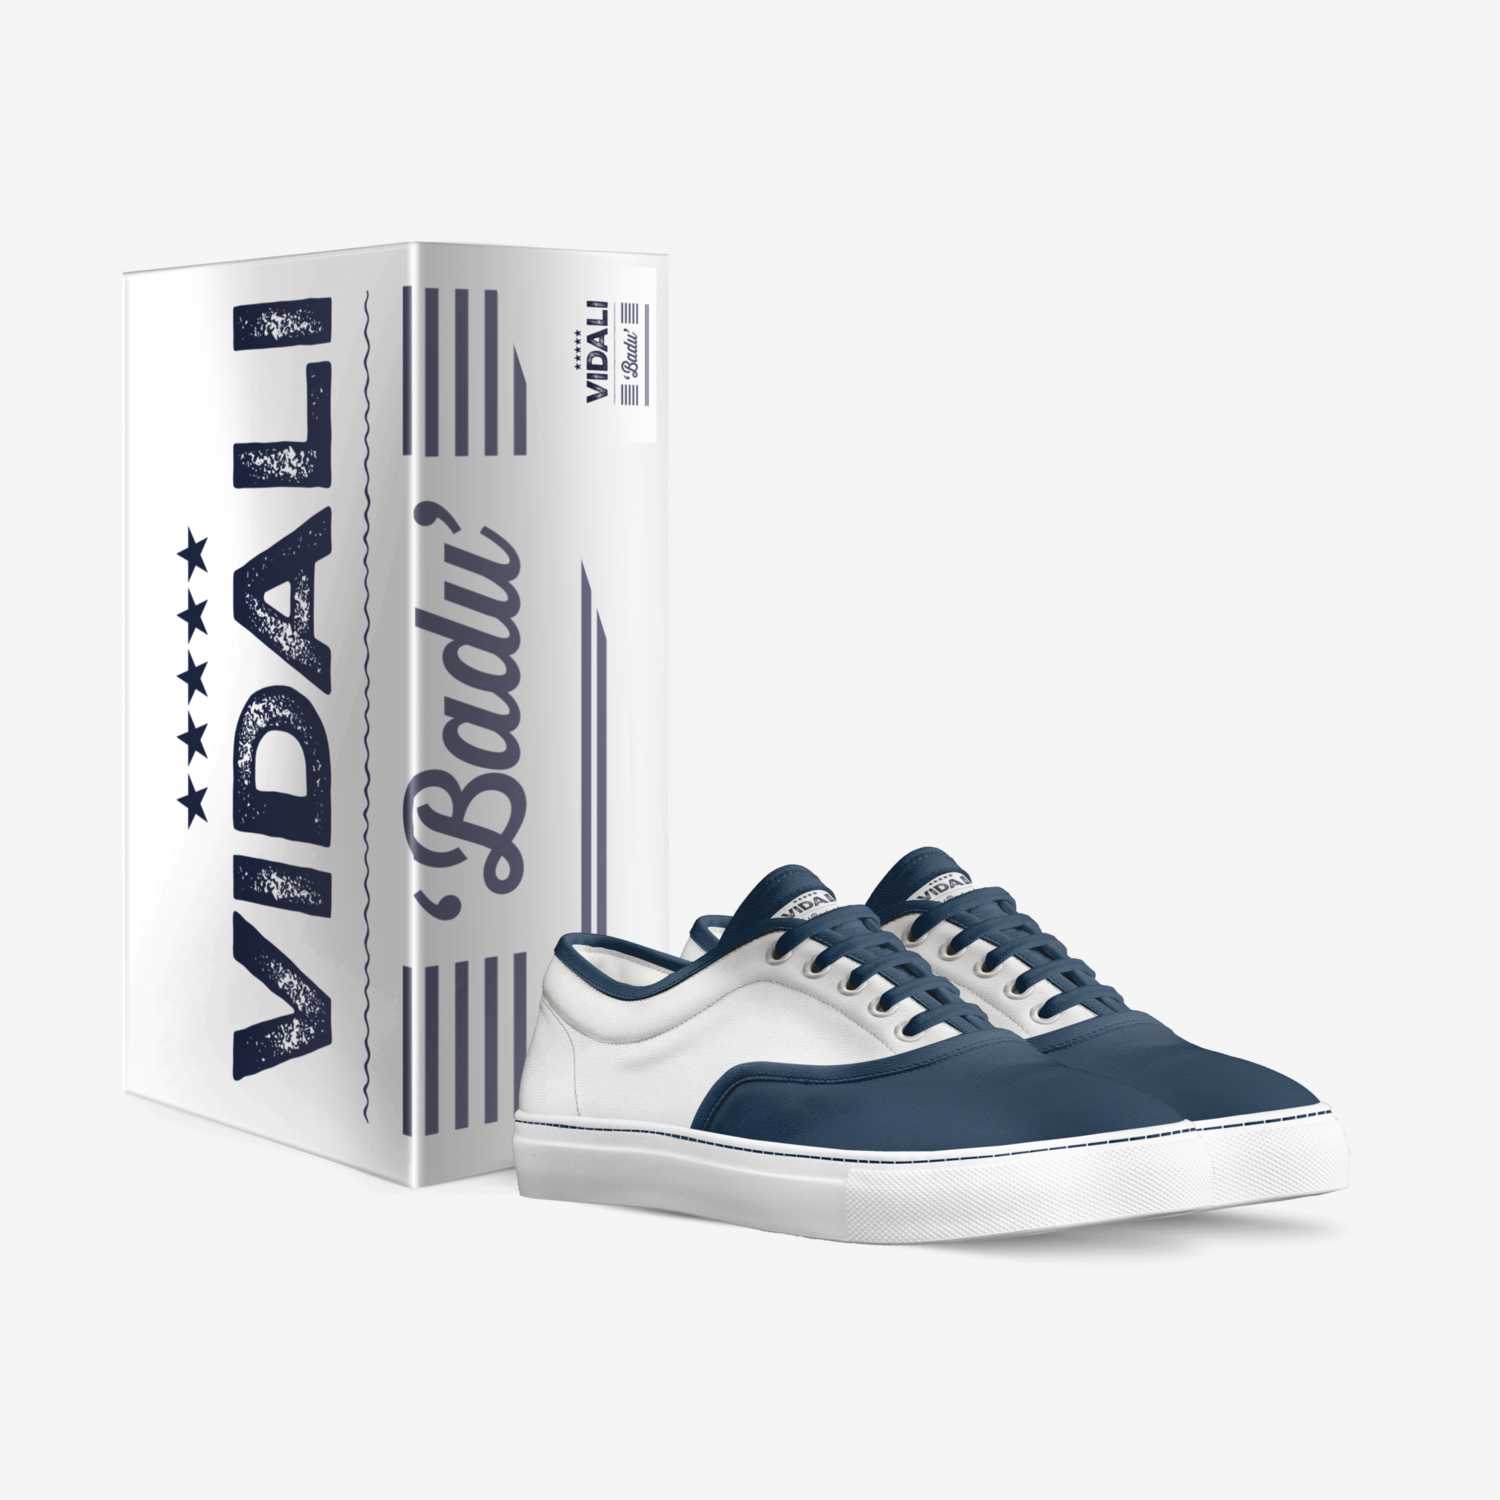 Vidali 'Badu' custom made in Italy shoes by Danuel Blakney | Box view